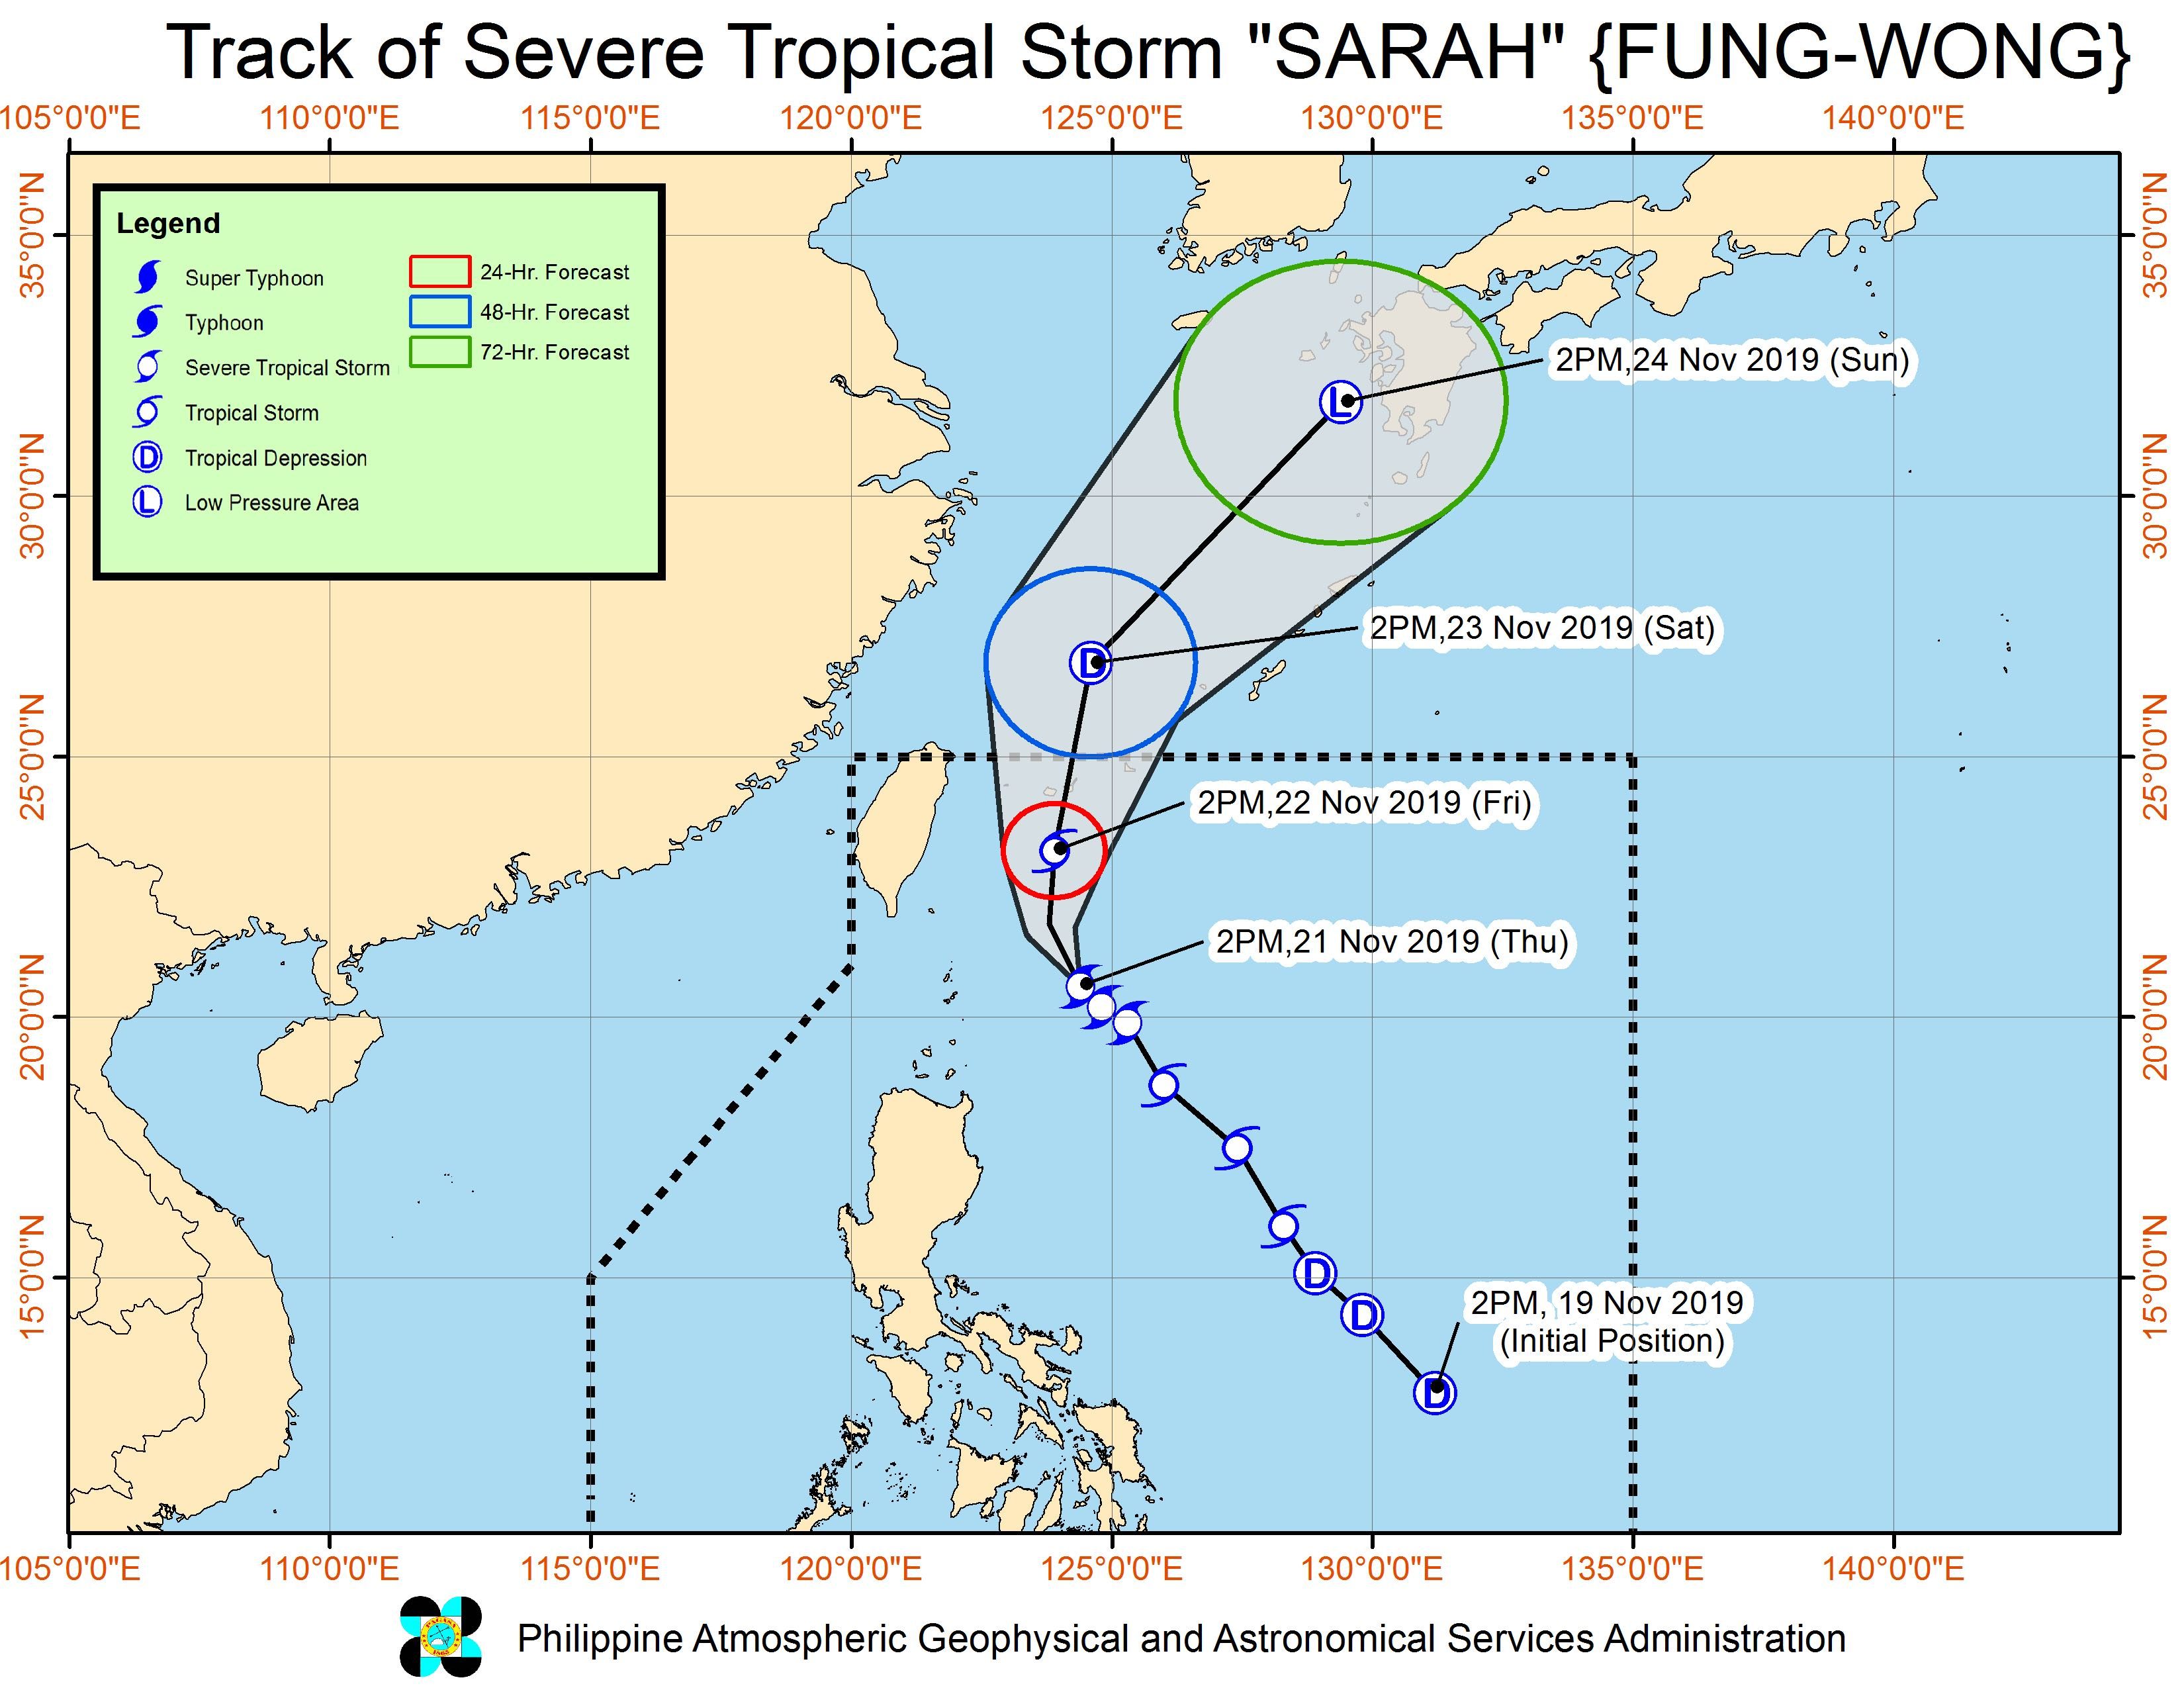 Forecast track of Severe Tropical Storm Sarah (Fung-wong) as of November 21, 2019, 5 pm. Image from PAGASA 